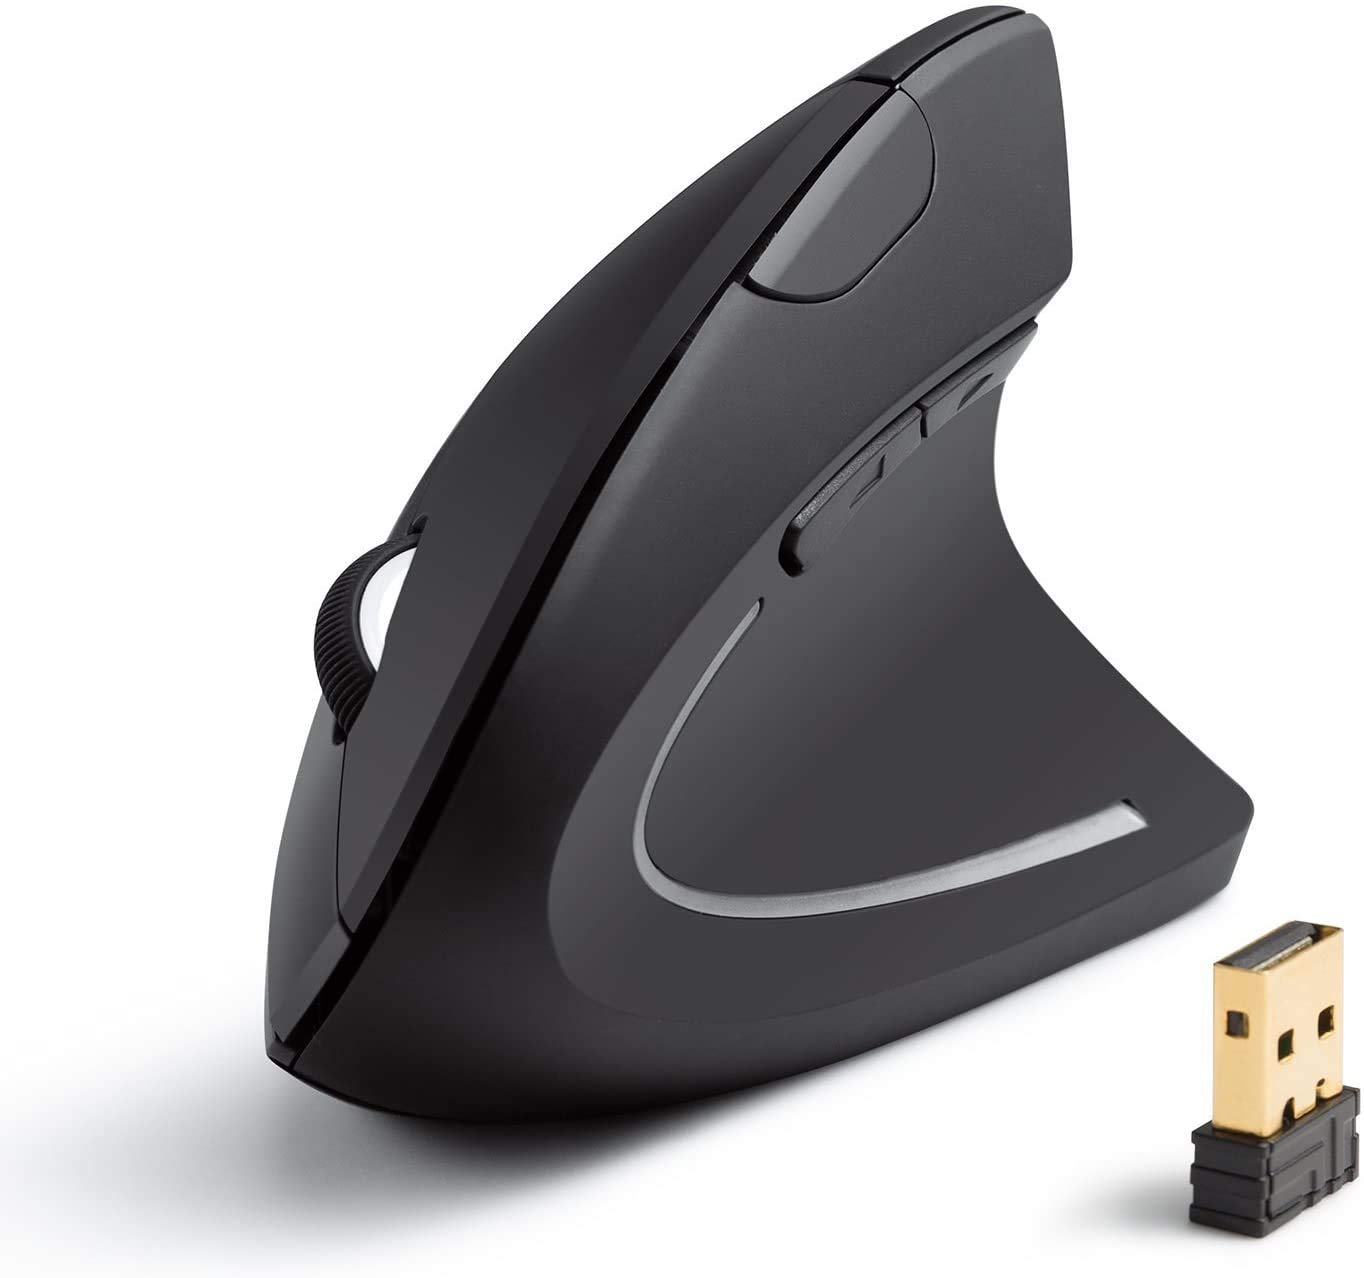 Anker 2.4G Wireless Vertical Ergonomic Optical Mouse, 800 / 1200 /1600 DPI, 5 Buttons for Laptop, Desktop, PC, Macbook - Black $18.99